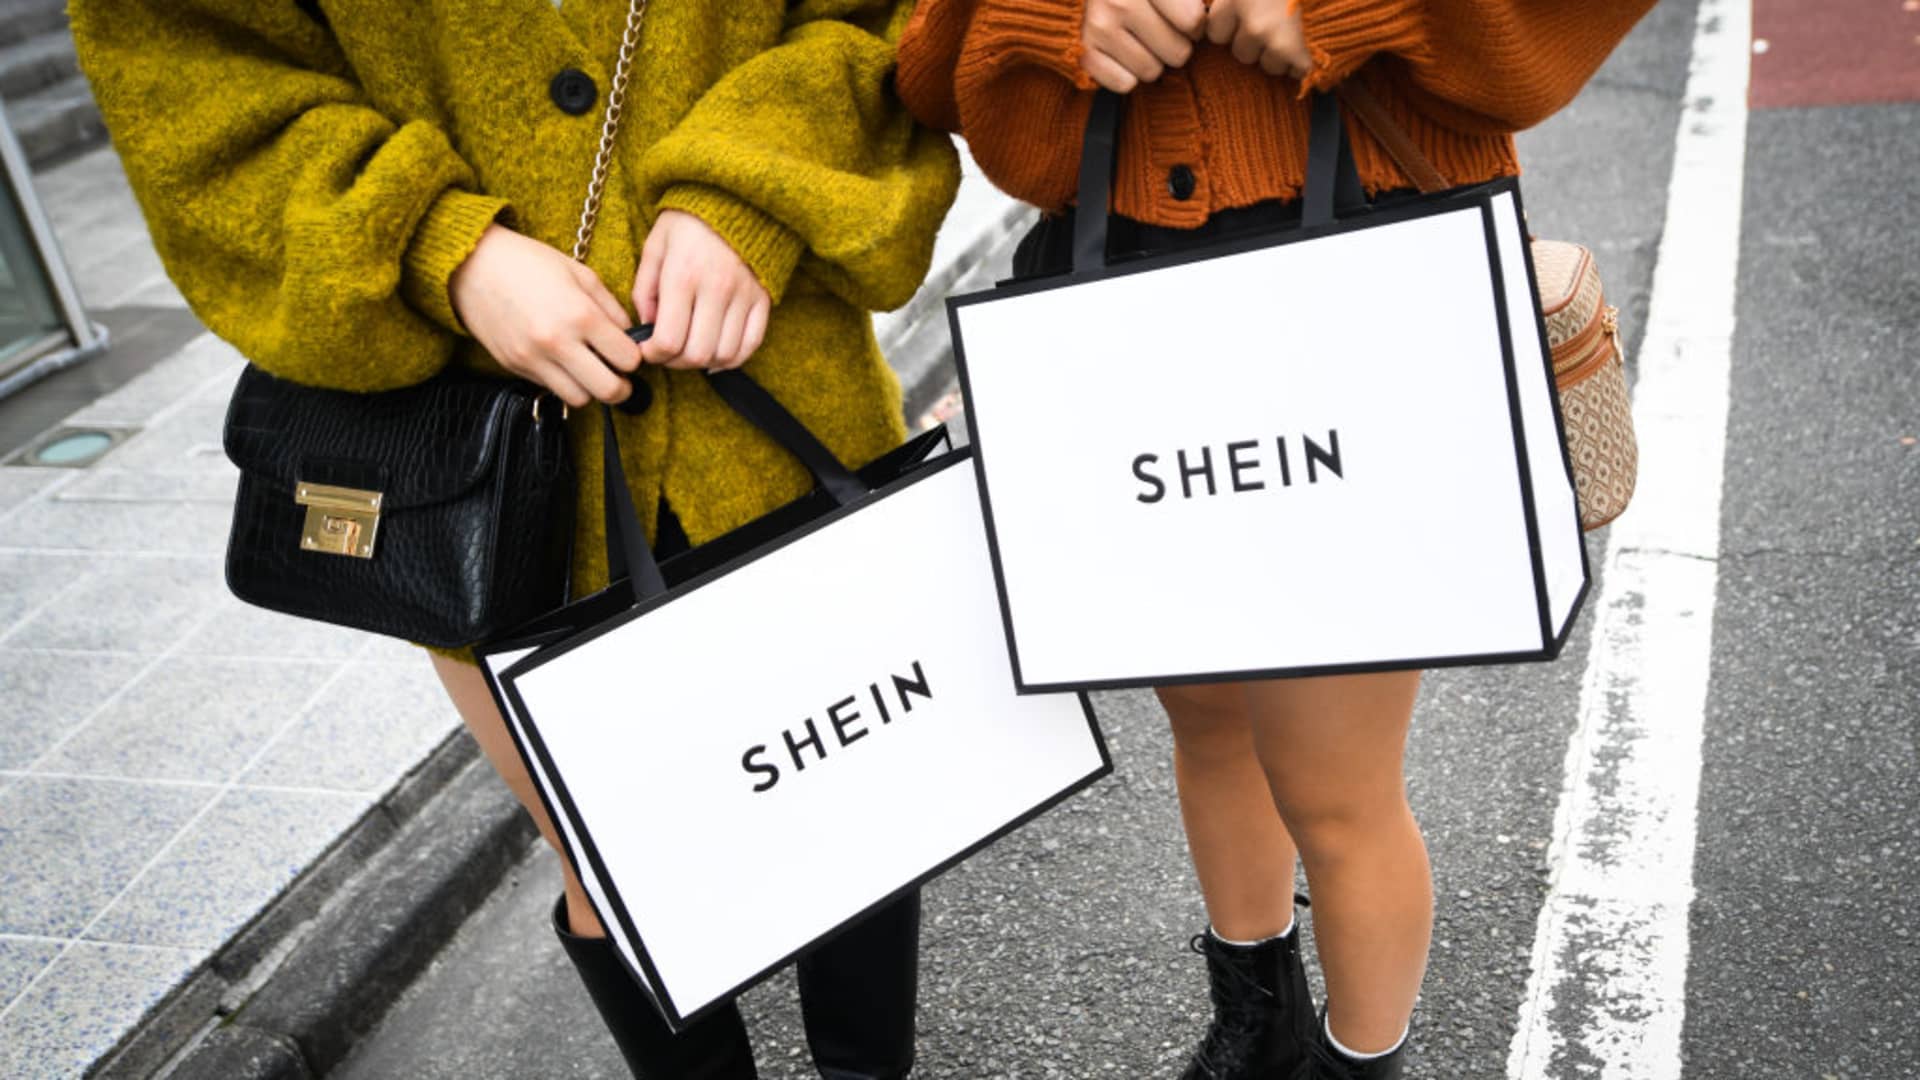 Shein says it is profitable as IPO rumors swirl